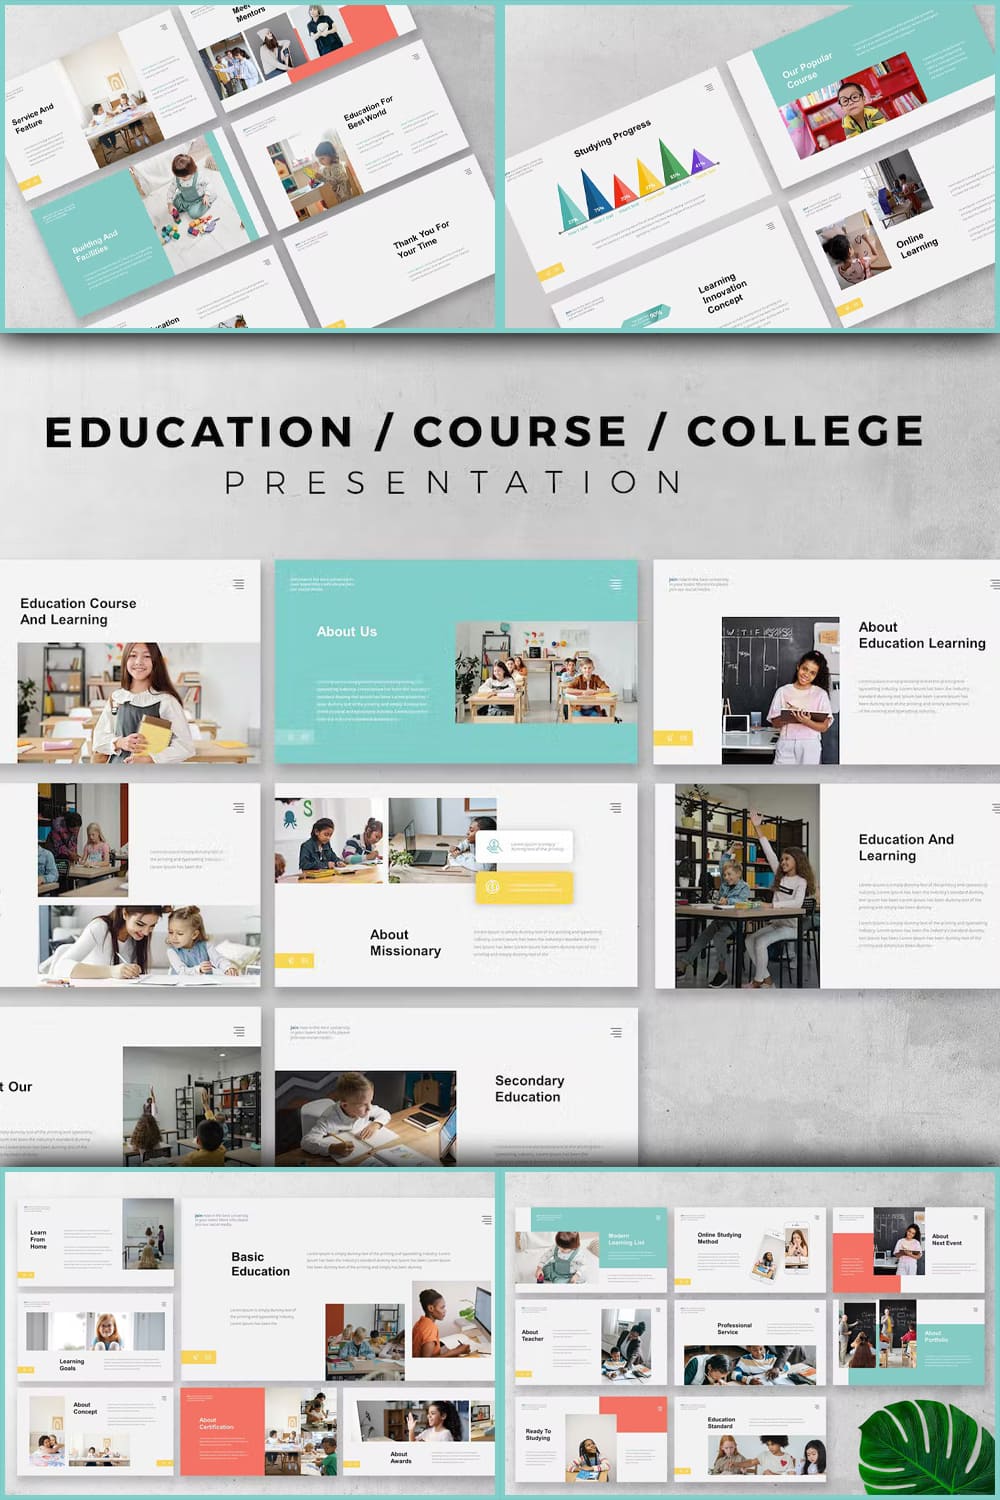 Education/College Presentation Slide - Pinterest.